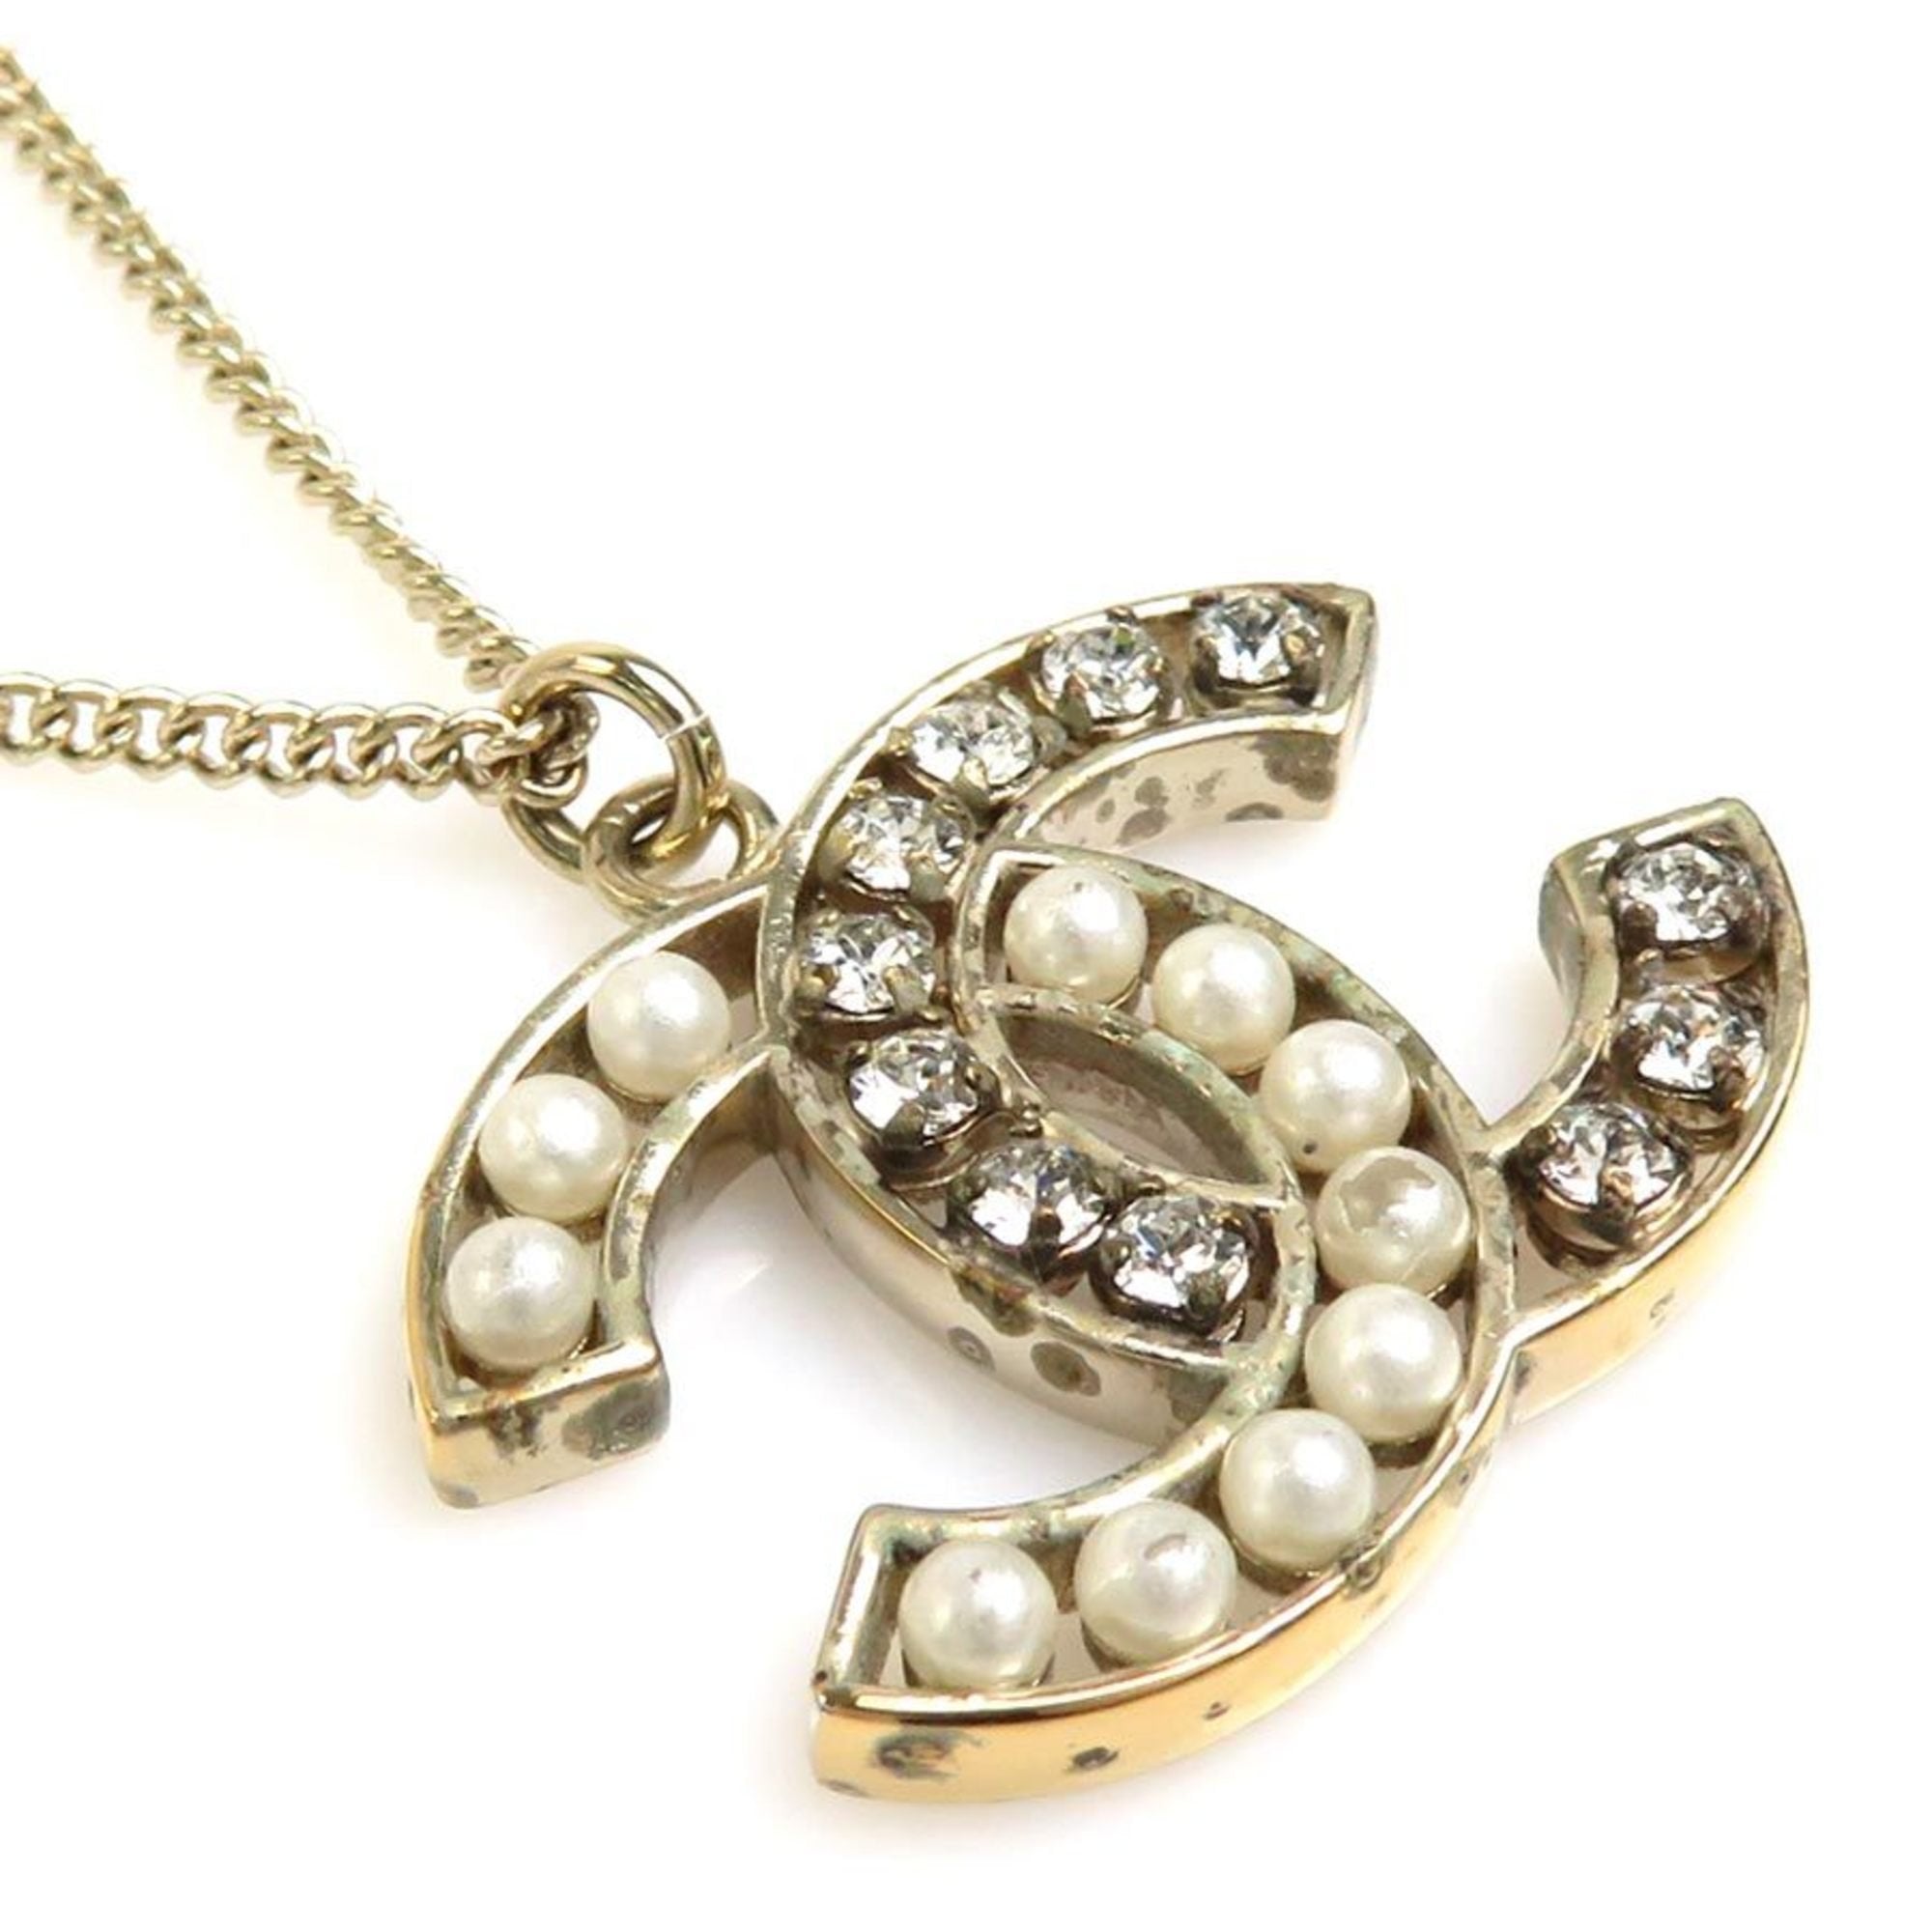 Chanel Necklace Coco Mark metal/Fake Pearl/Rhinestone Gold/White/Silver Women's